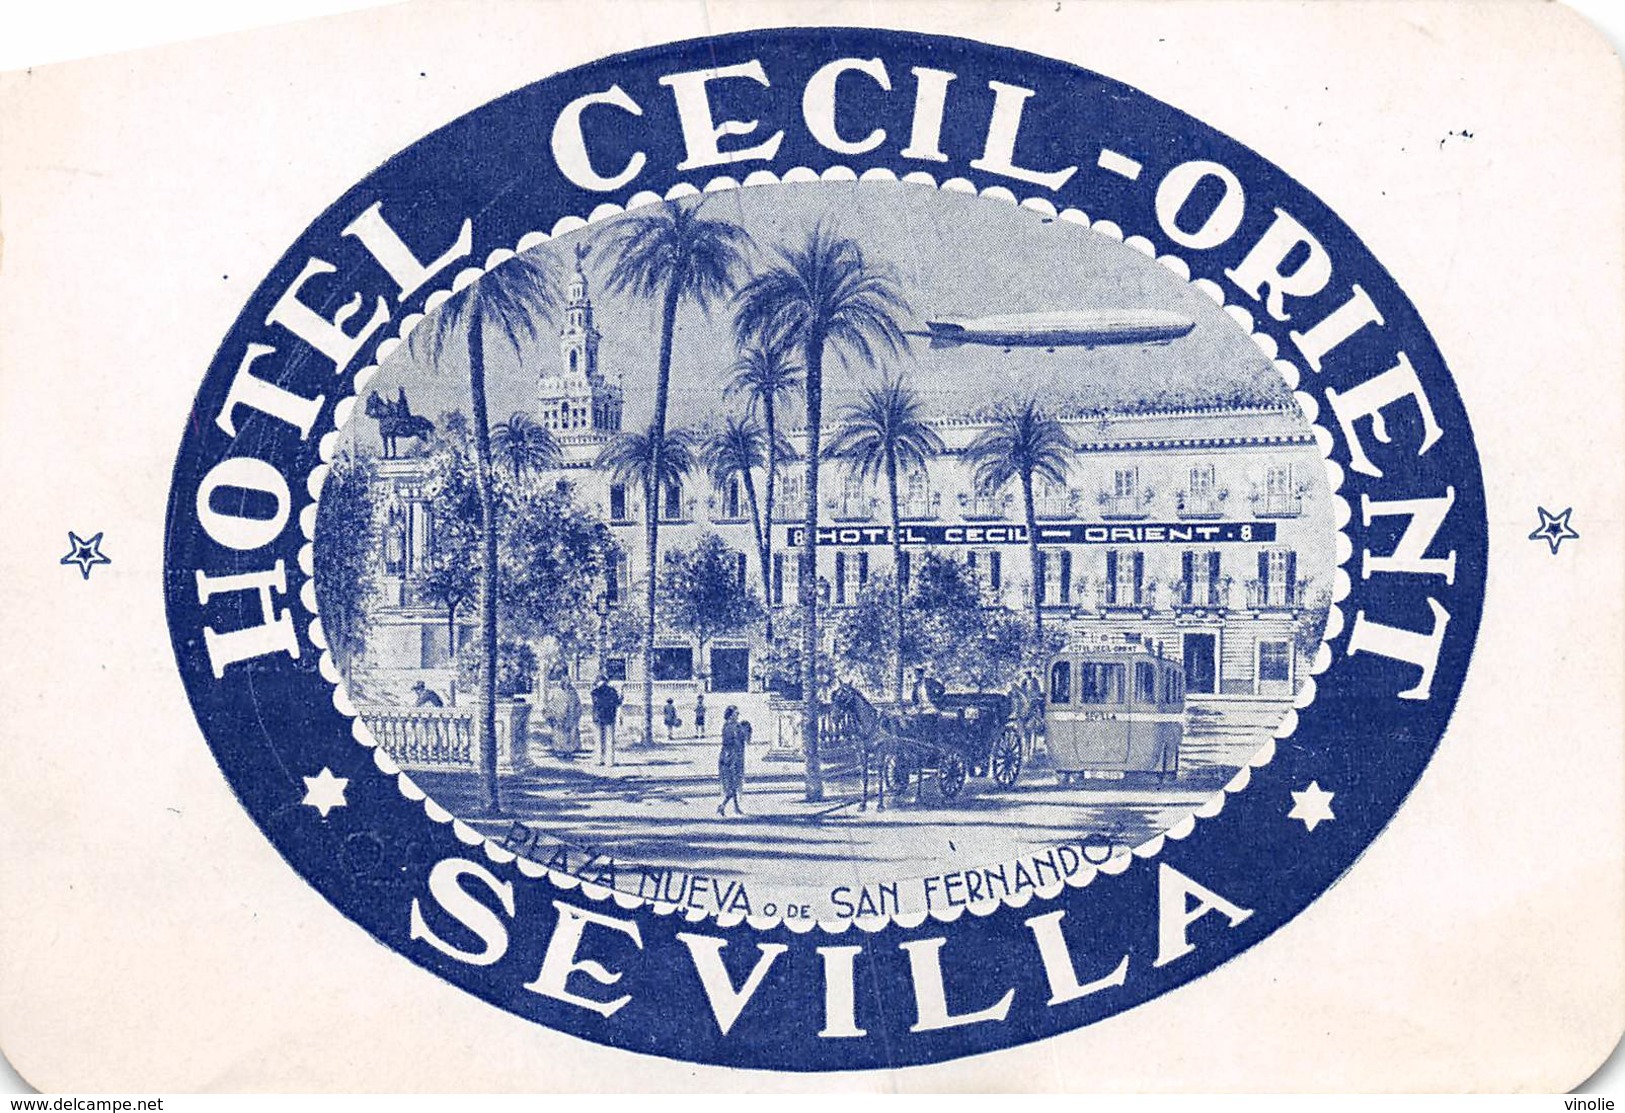 PIE-JmT-19-1660 : CARTE DE L'HOTEL CECIL-ORIENT. SEVILLA - Sevilla